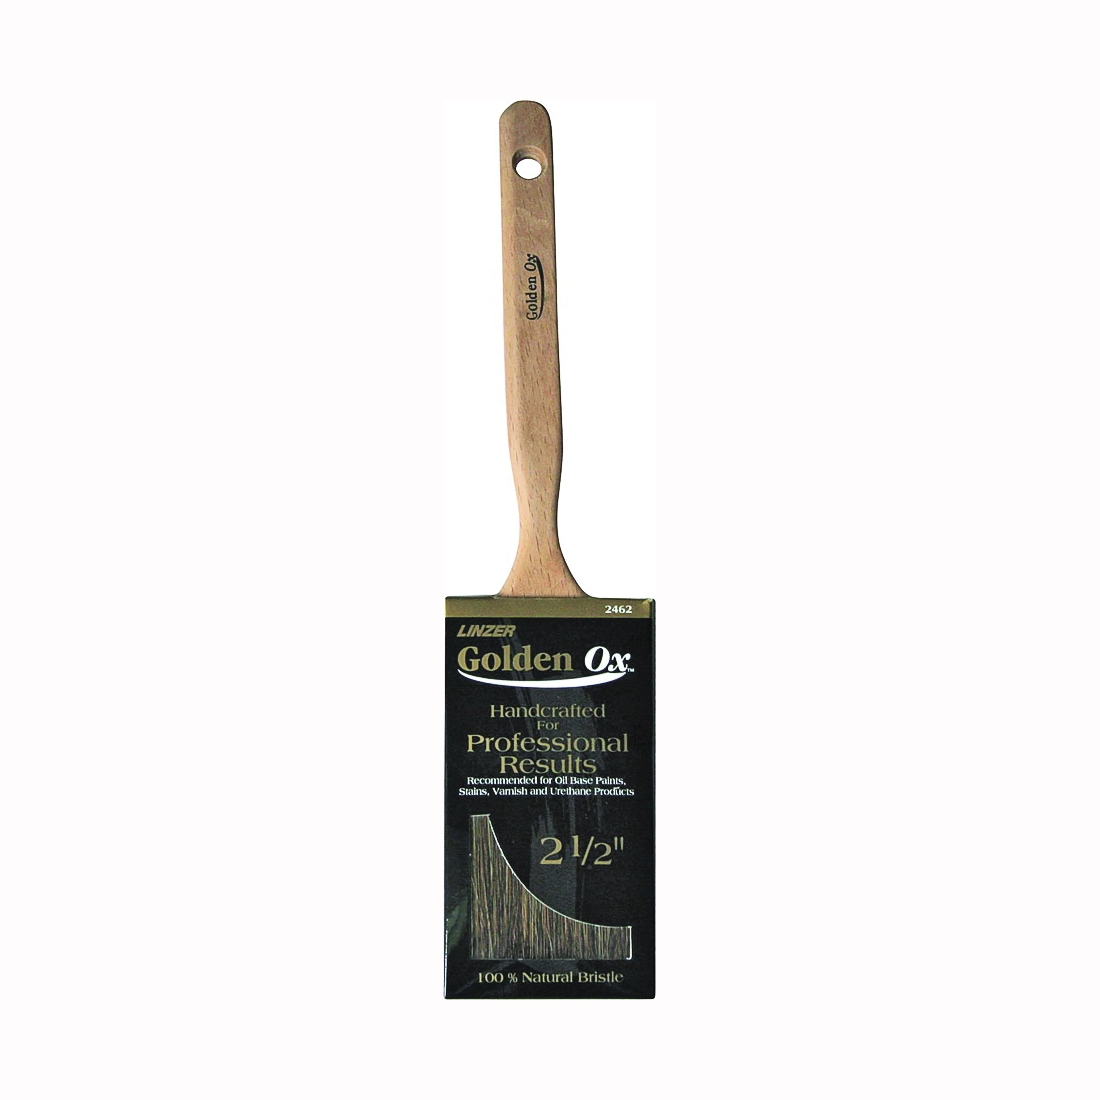 WC 2462-2.5 Paint Brush, 2-1/2 in W, 2-3/4 in L Bristle, Very Fine China Bristle, Flat Sash Handle